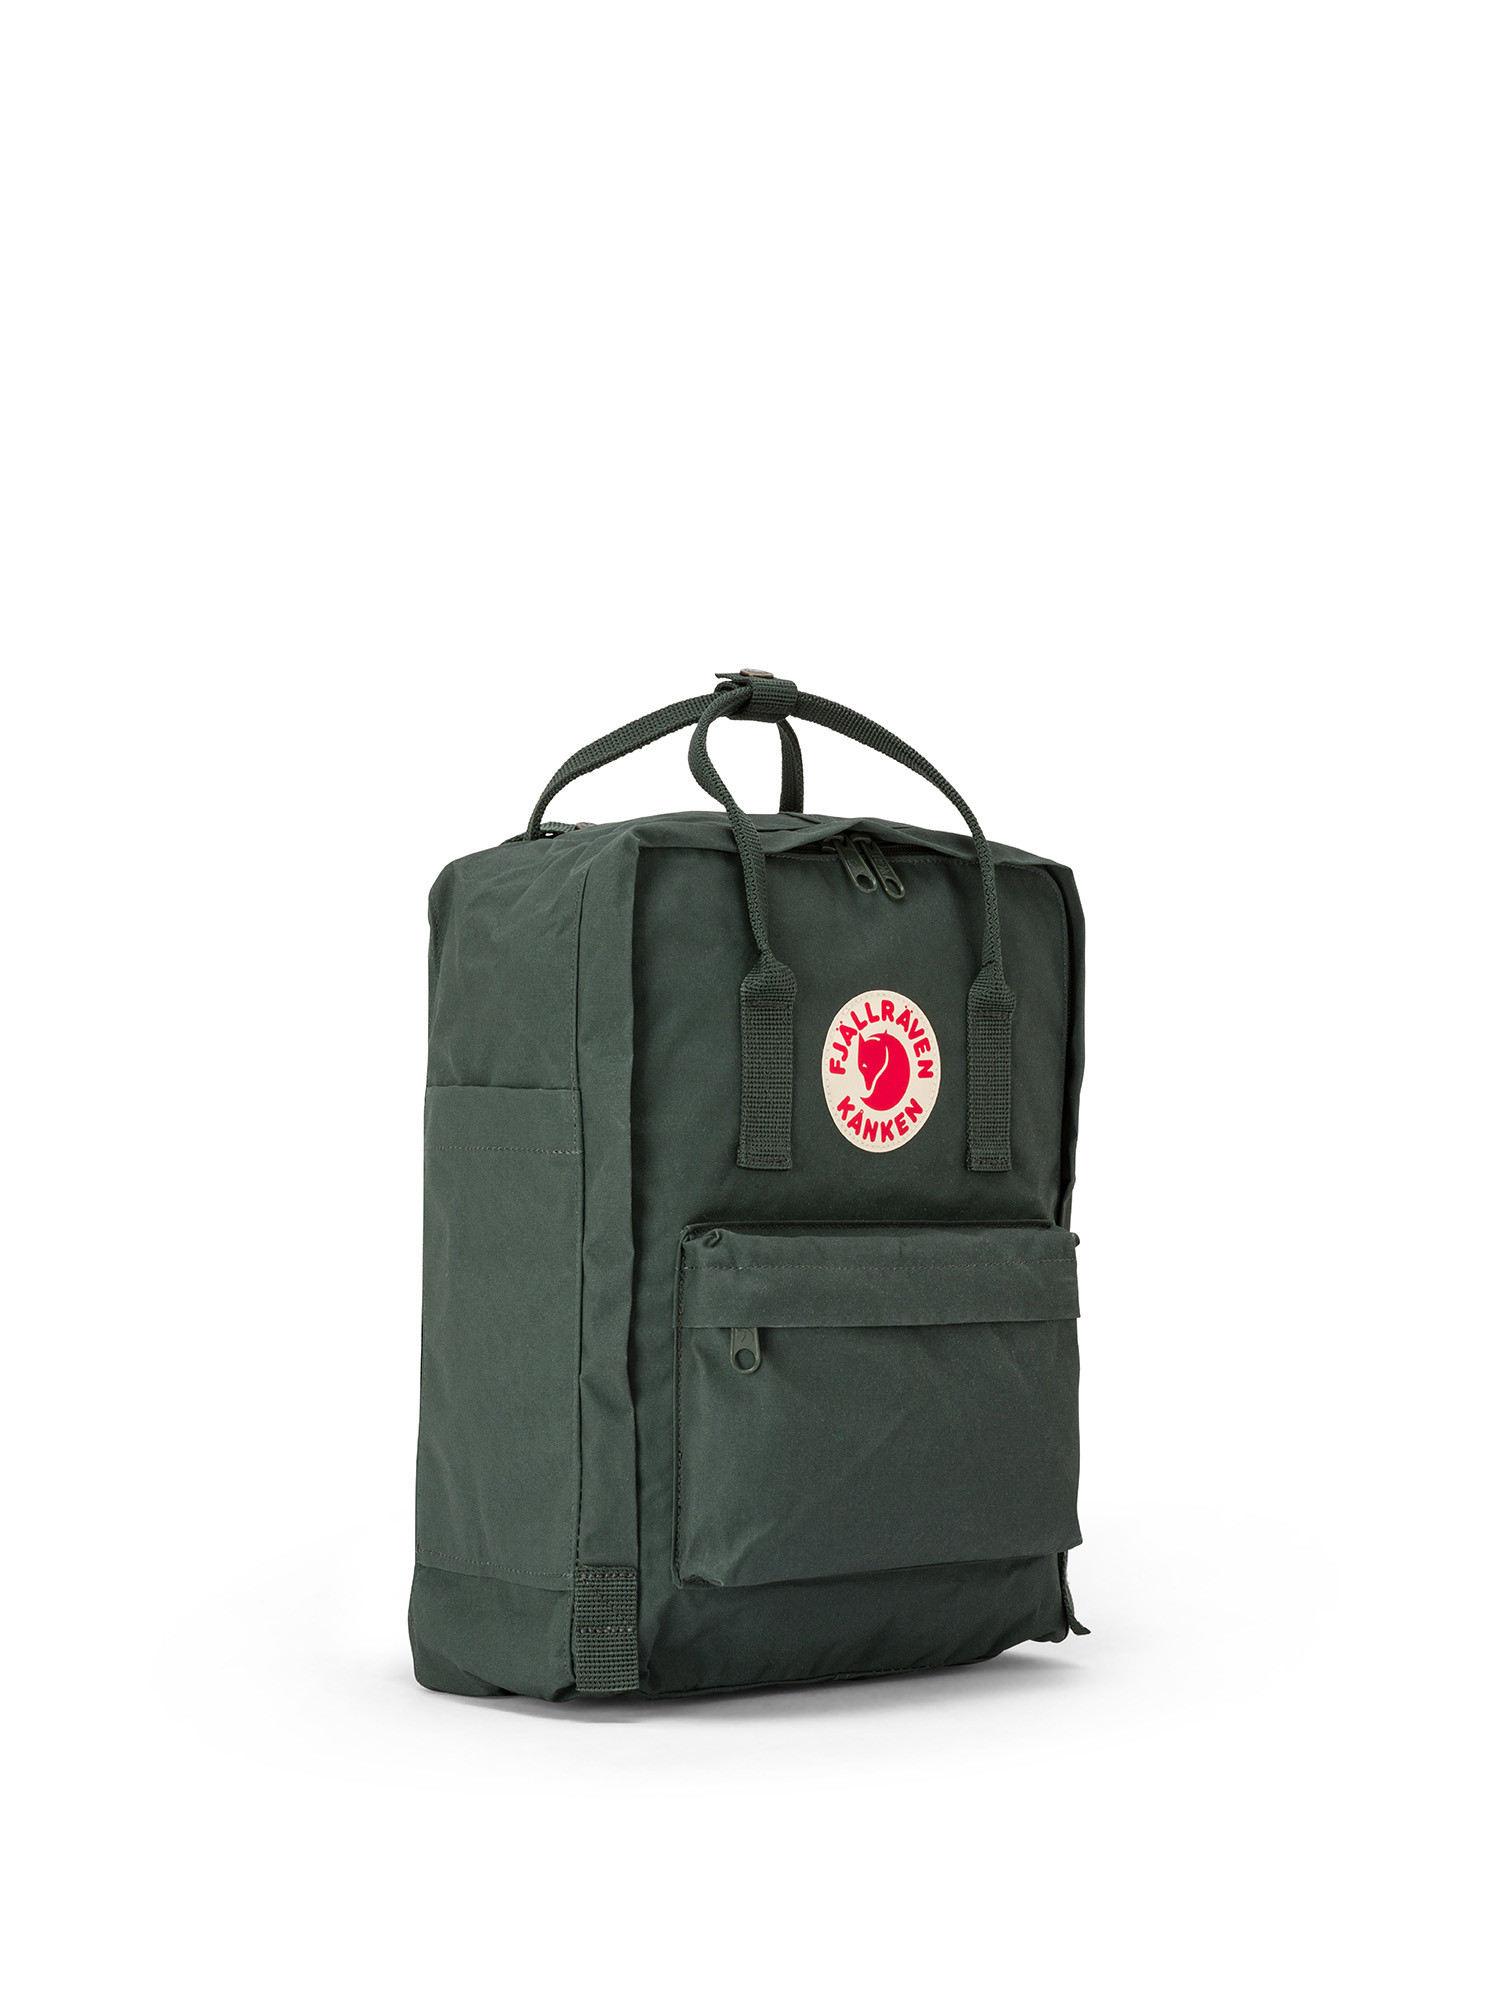 Fjallraven - Classic Kånken backpack in durable Vinylon fabric, Dark Green, large image number 1